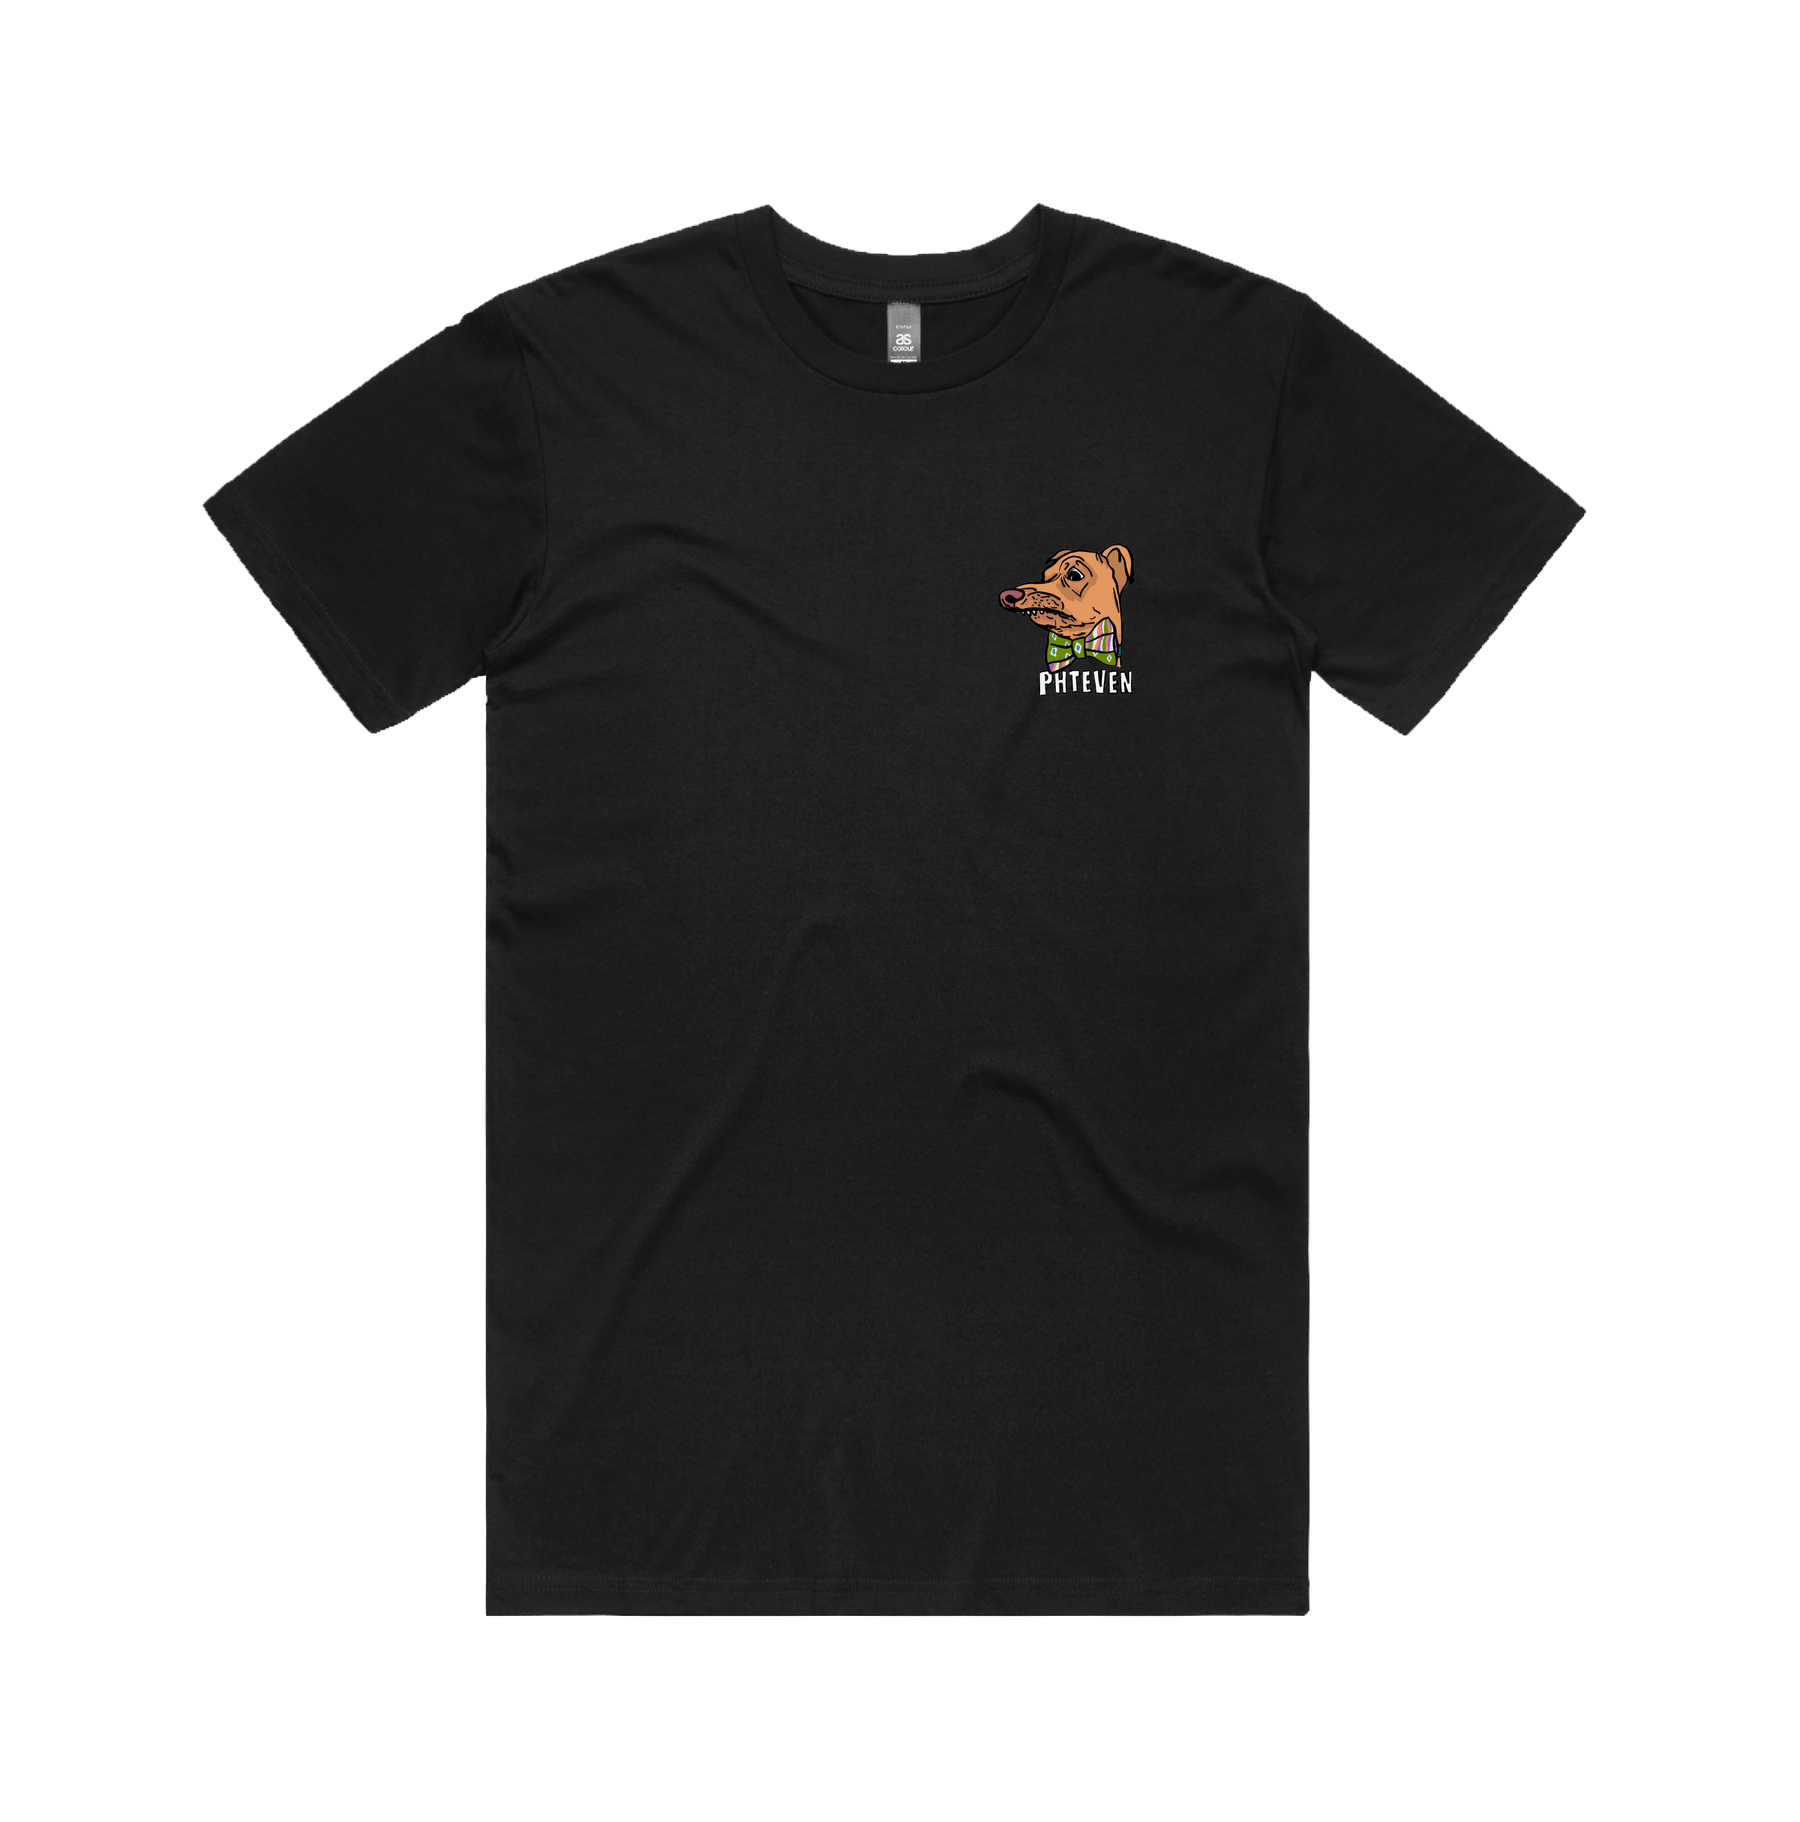 S / Black / Small Front Design Phteven Good Boy 🐶 - Men's T Shirt